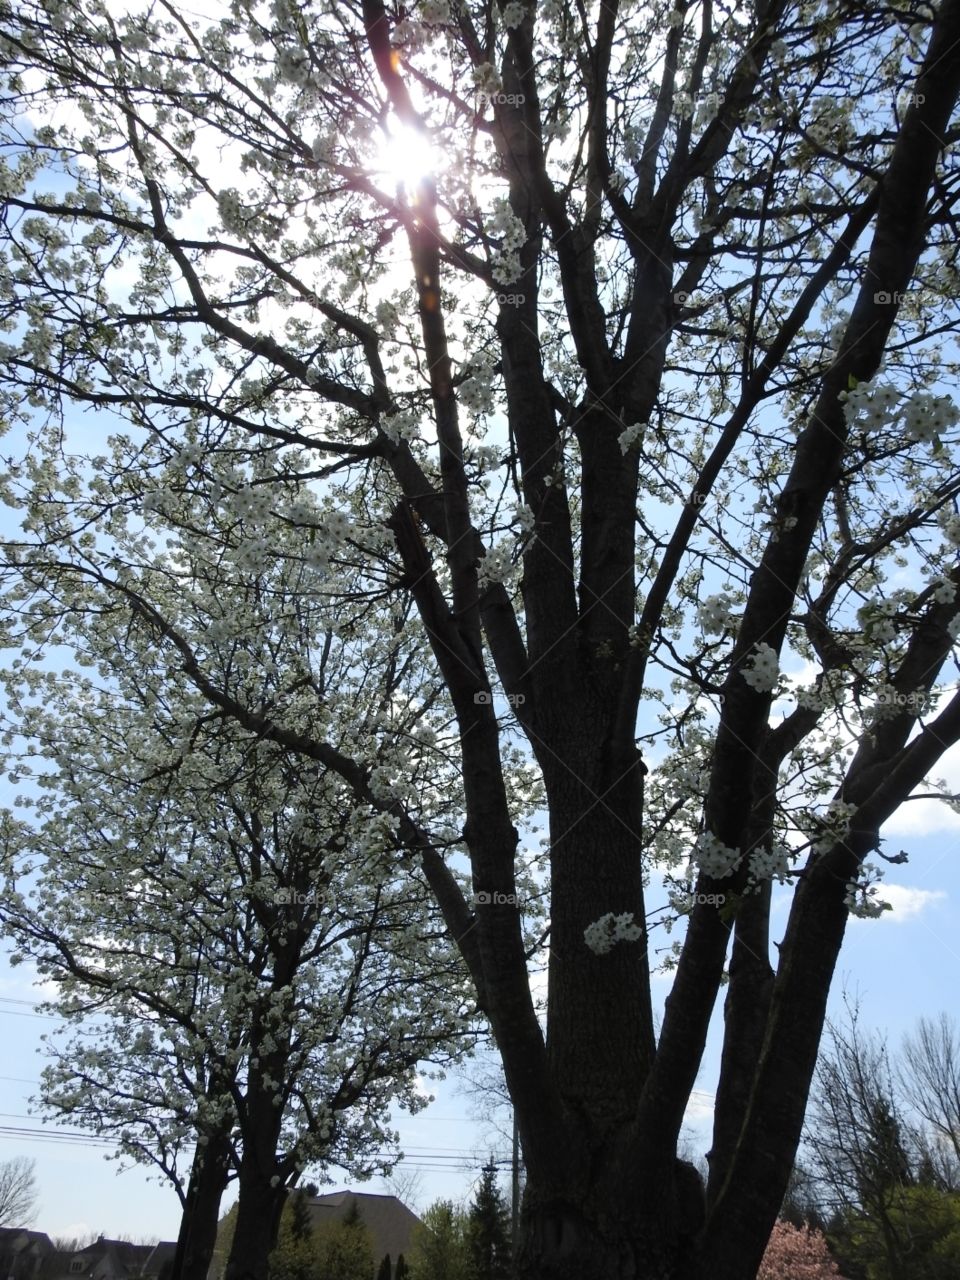 flower trees in the Sun